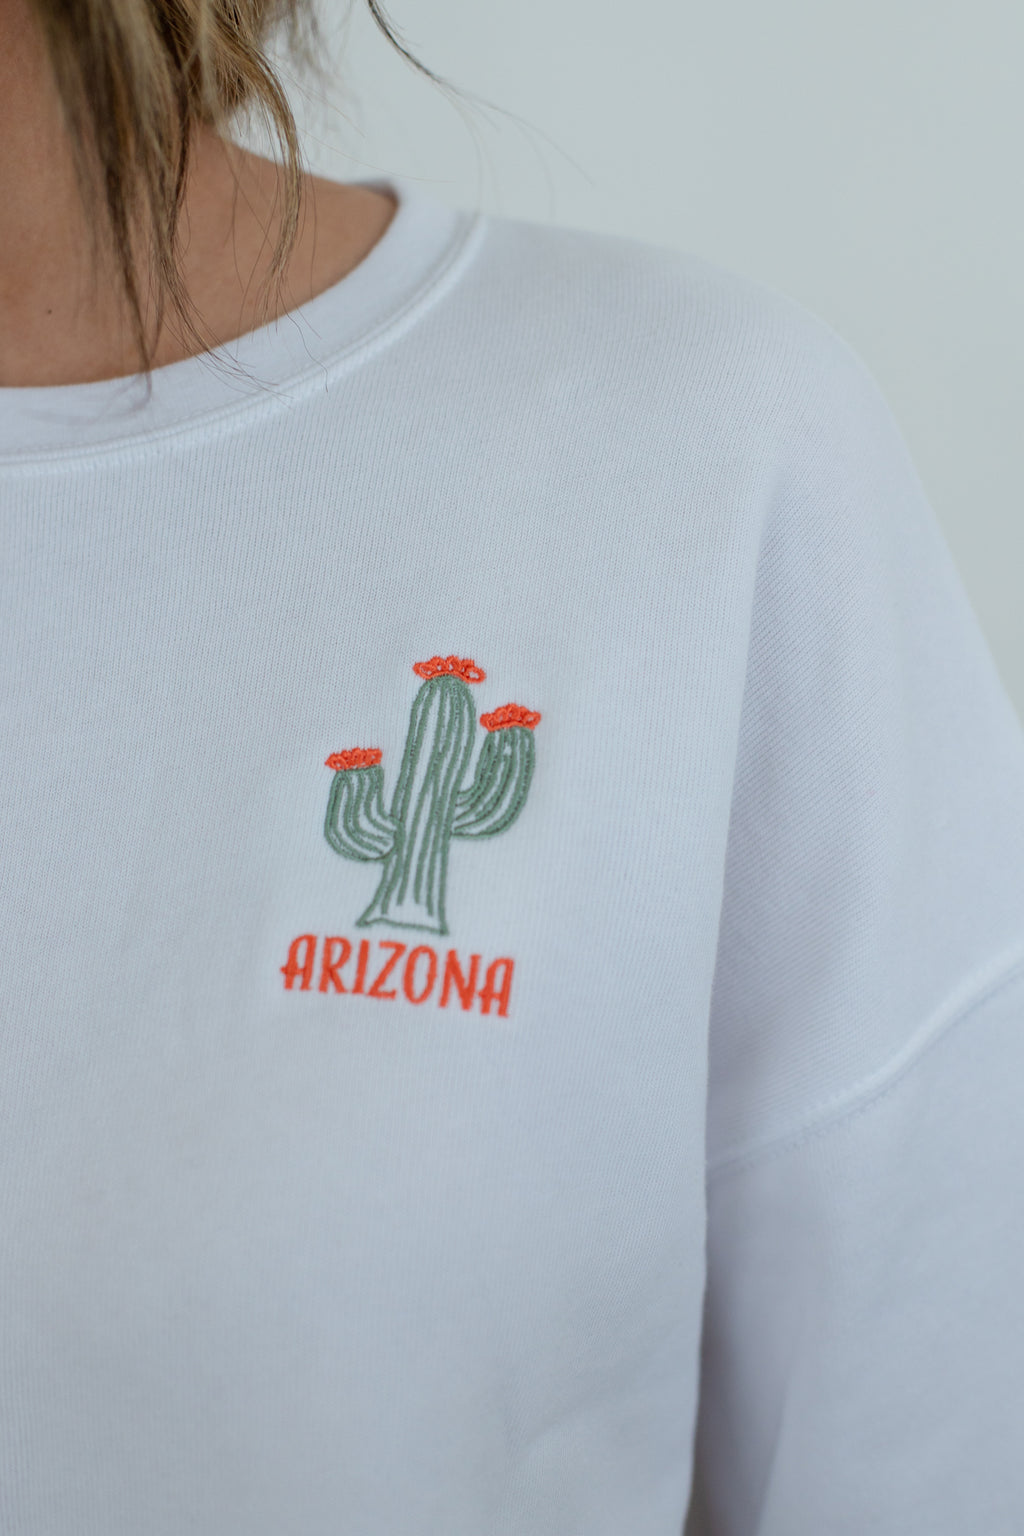 Arizona Embroidered White Sweatshirt - Unisex - Shop Back Home